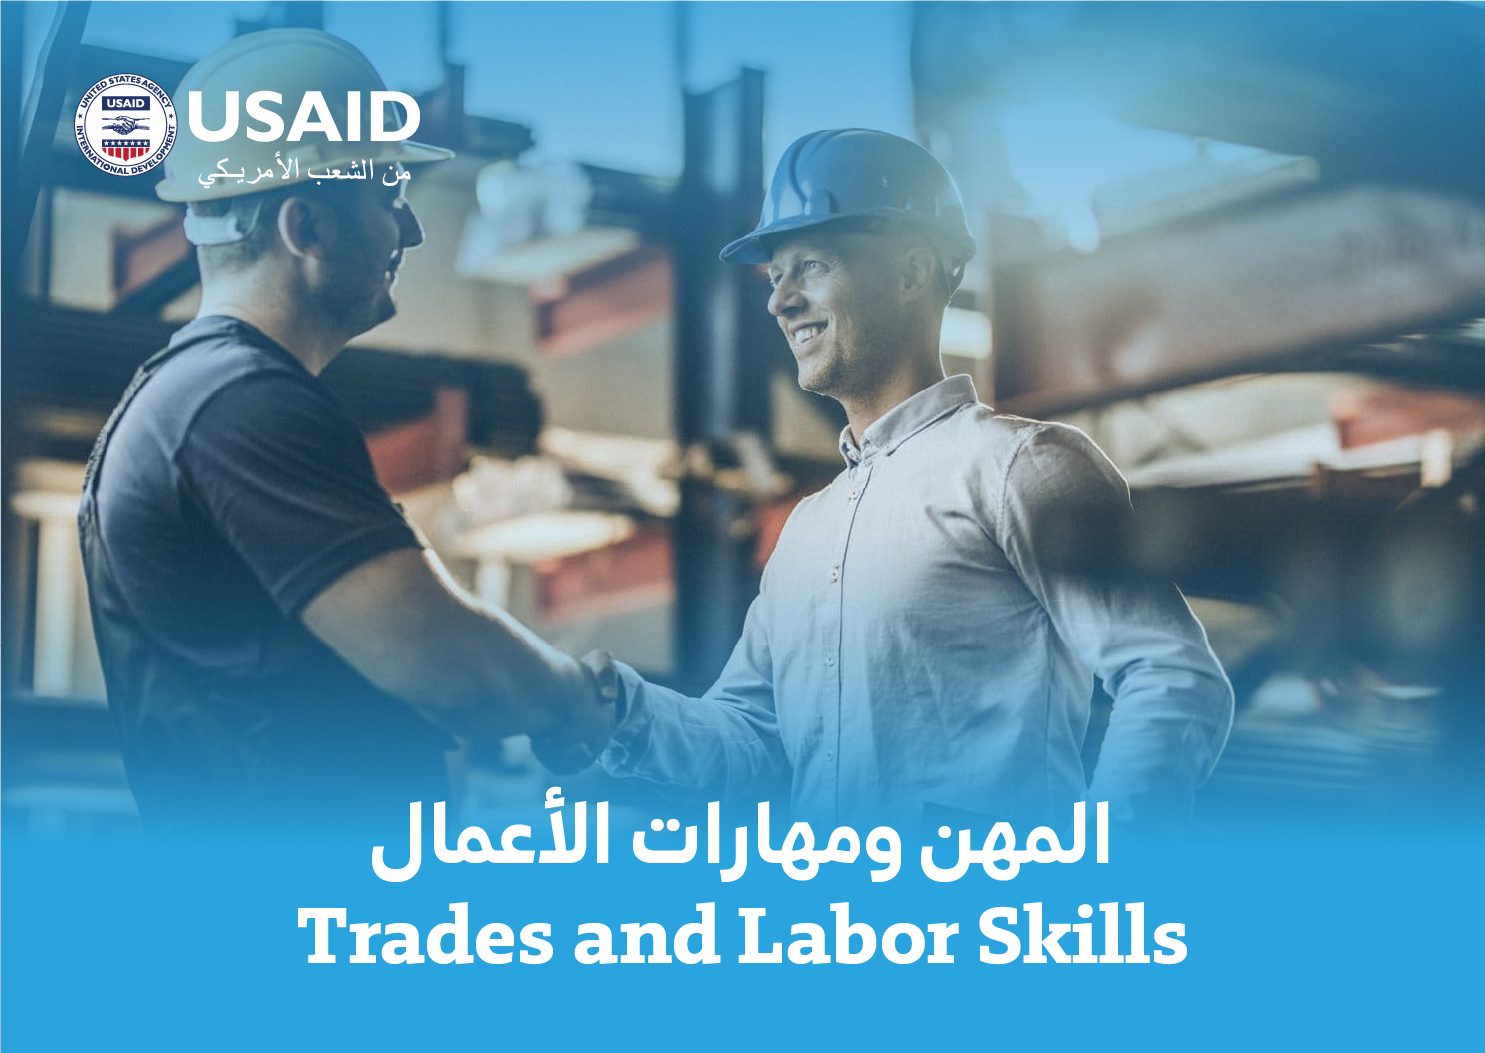 Trades and Labor Skills